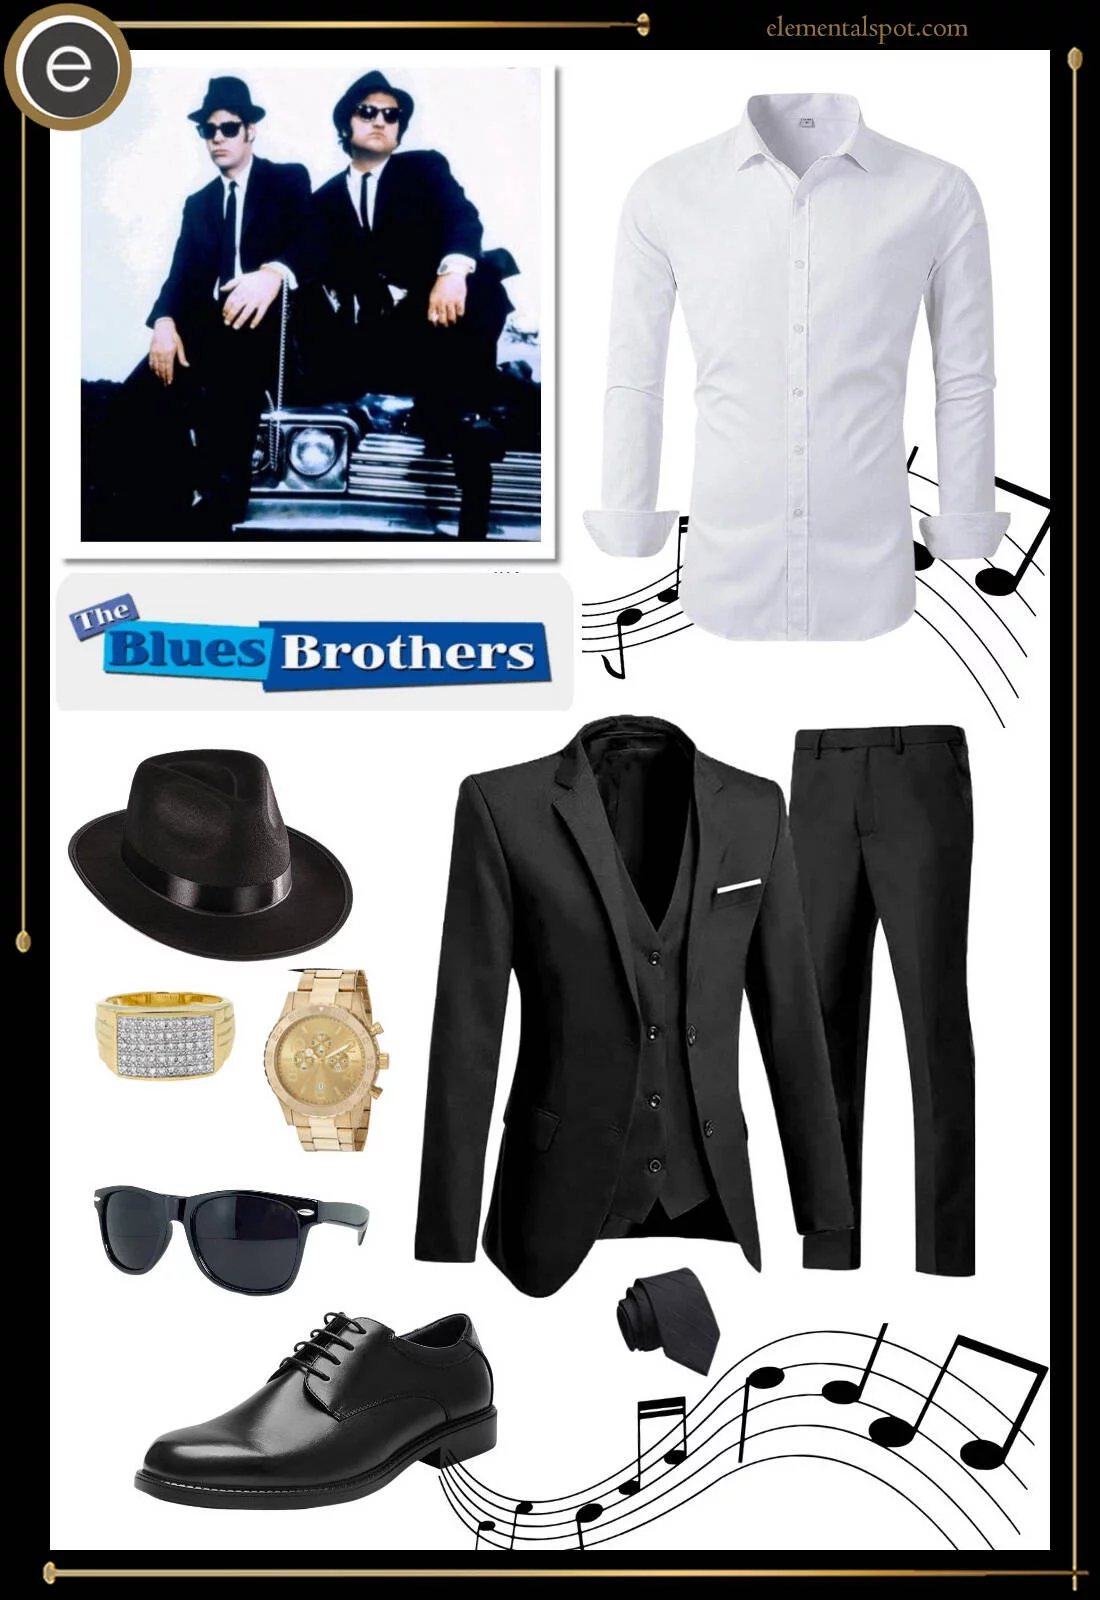 Dress Up Like The Blues Brothers - Elemental Spot